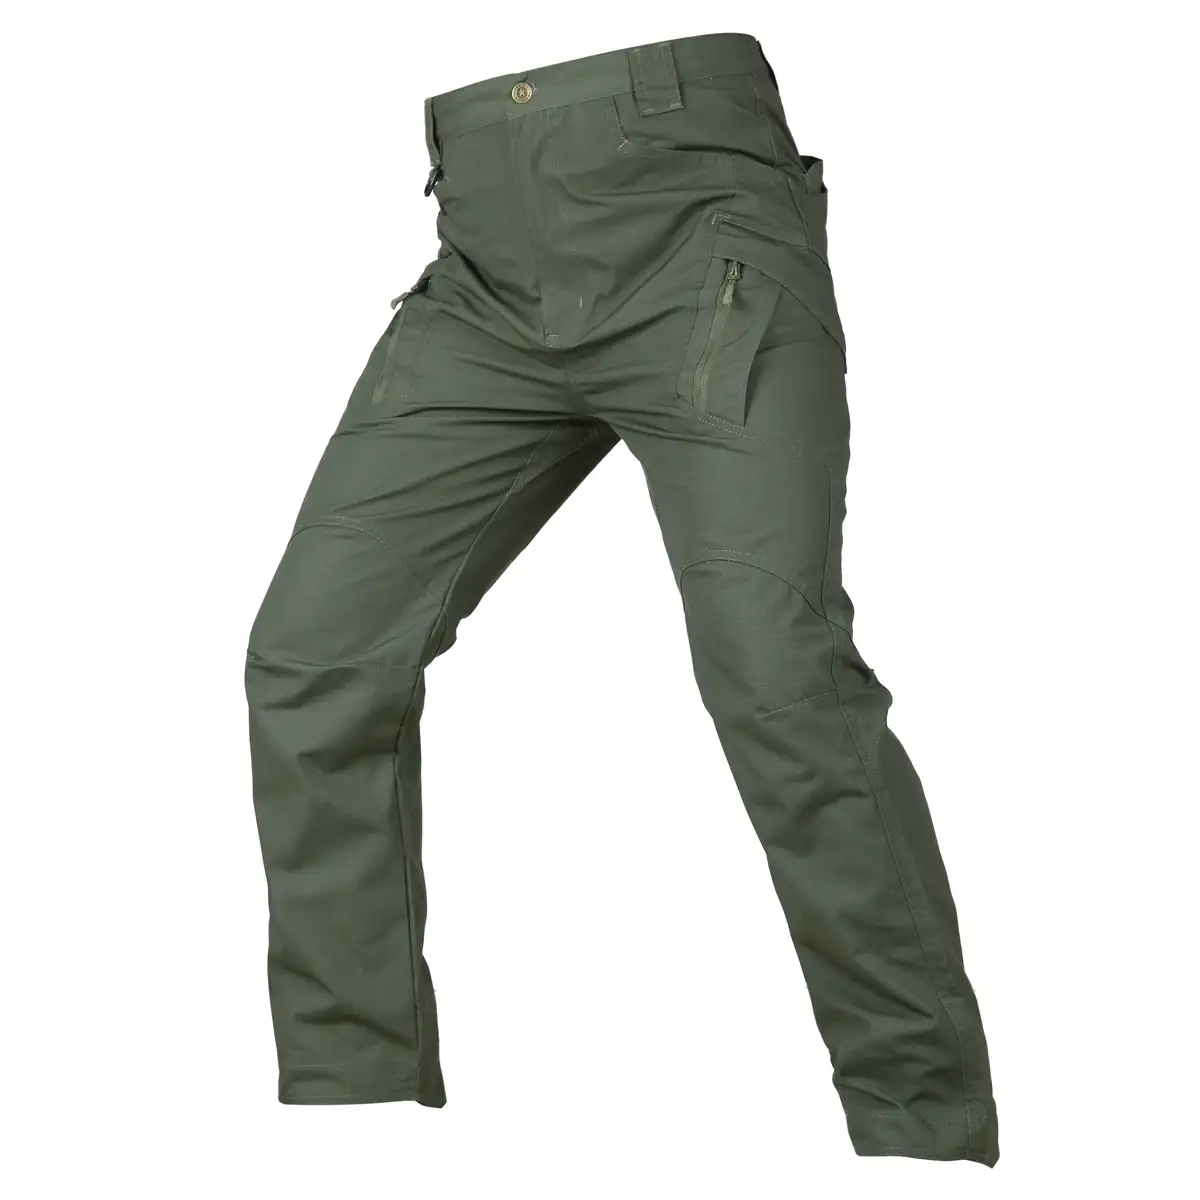 Al aire libre Multi bolsillos ejército pantalones militares de combate táctico caza pantalones de carga